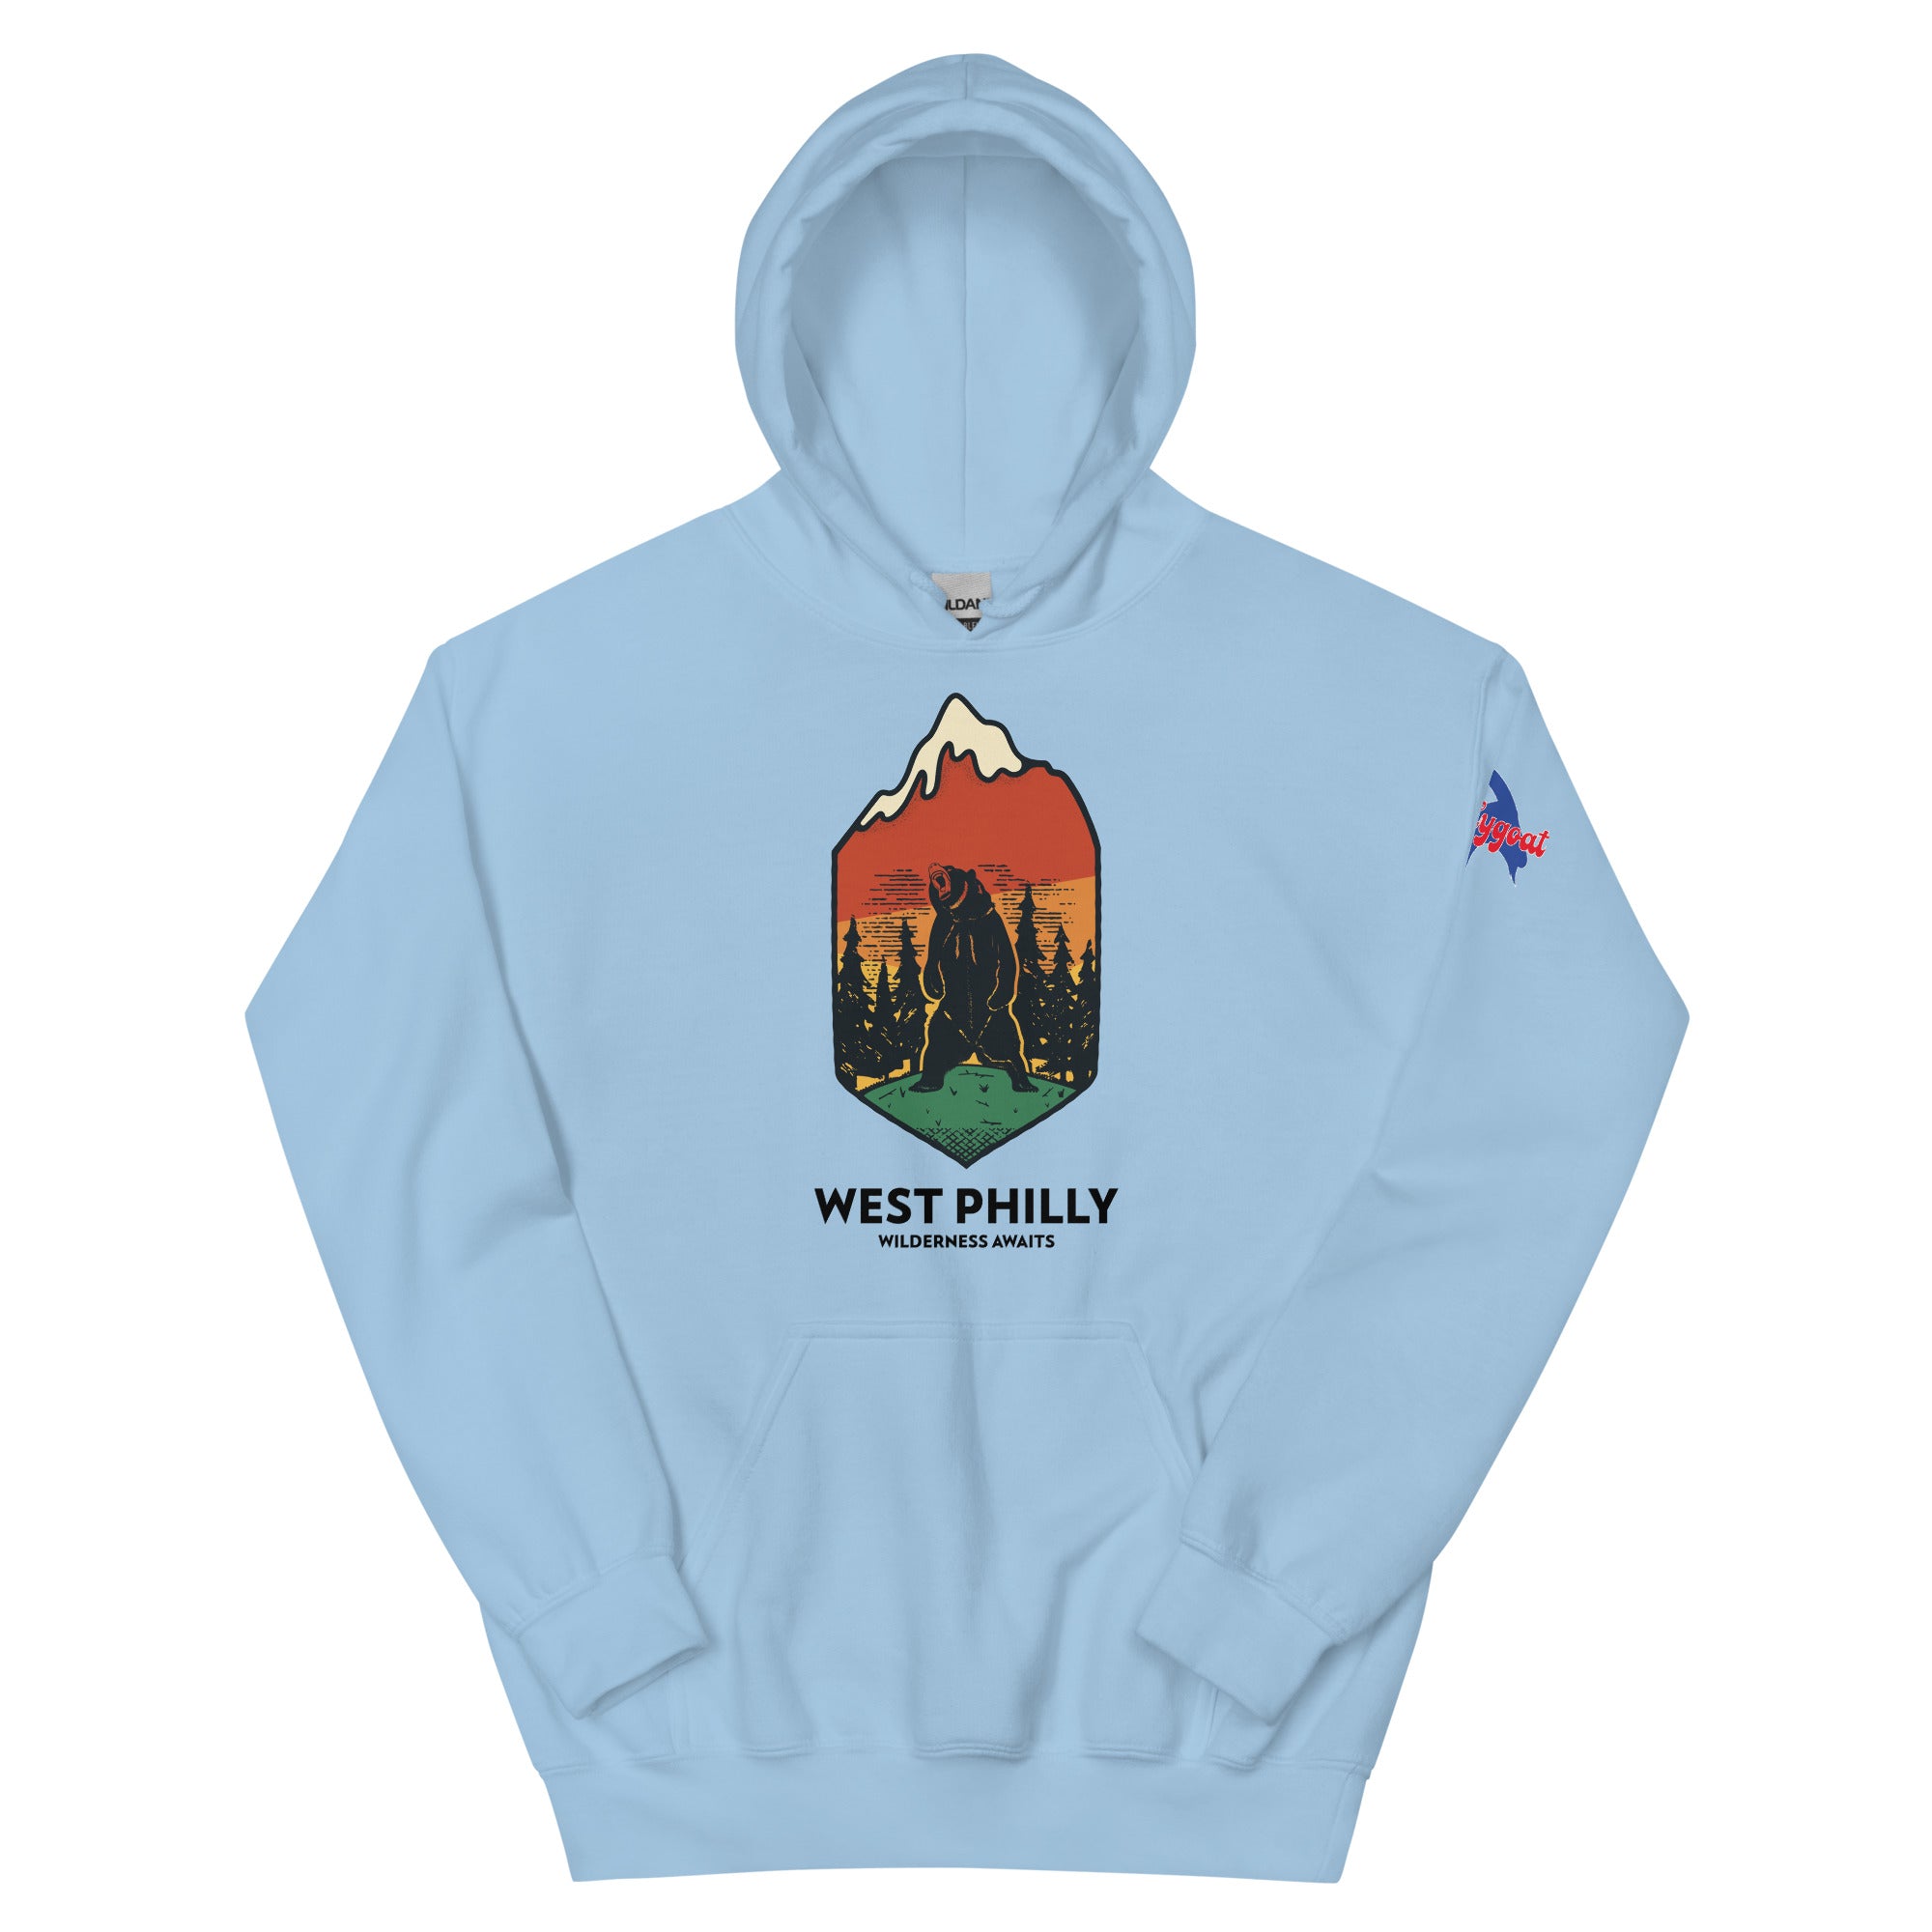 West Philly Philadelphia outdoors wildernesslight blue hoodie Phillygoat